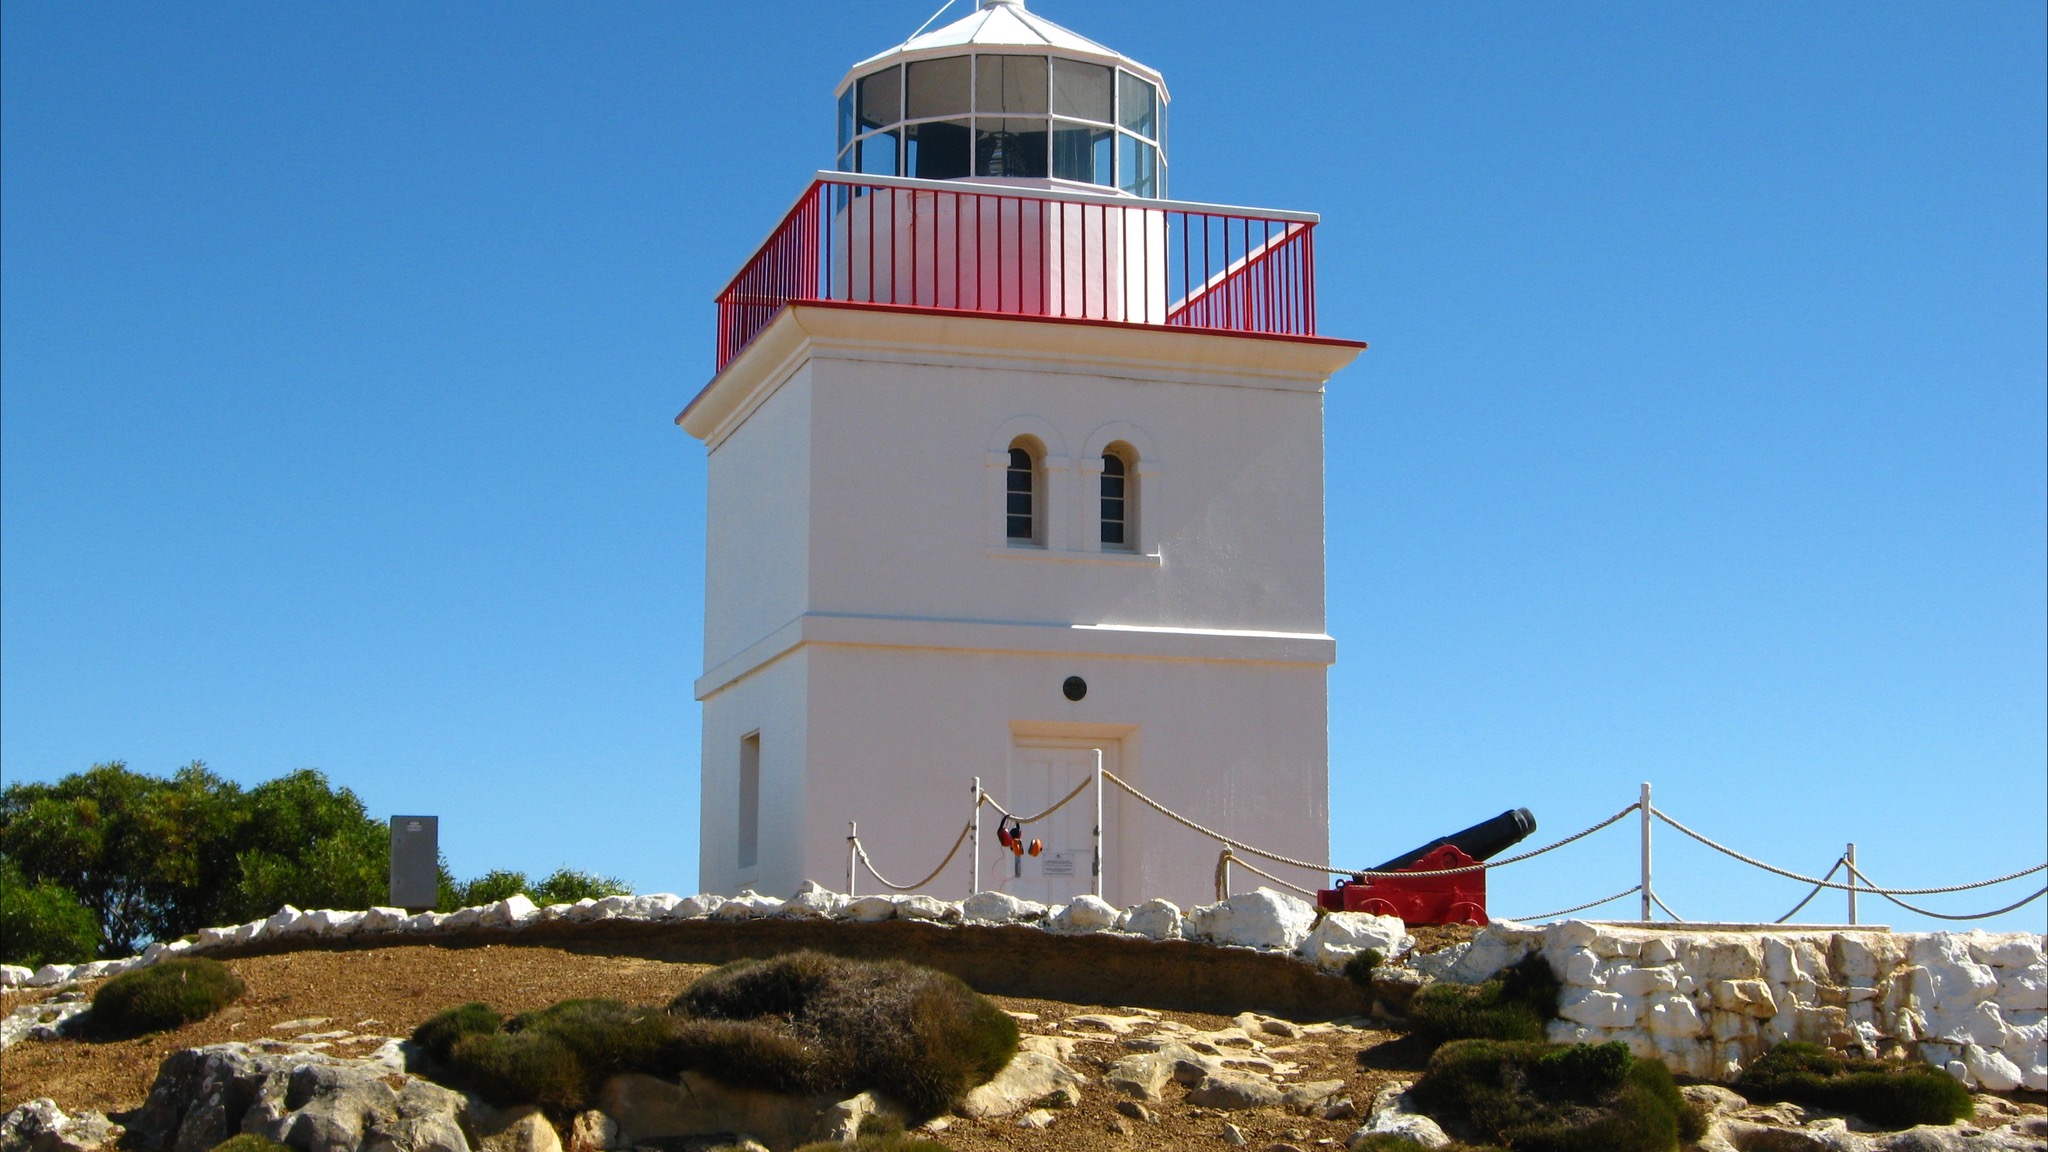 Cape Borda Lighthouse Keepers Heritage Accommodation - Stayed